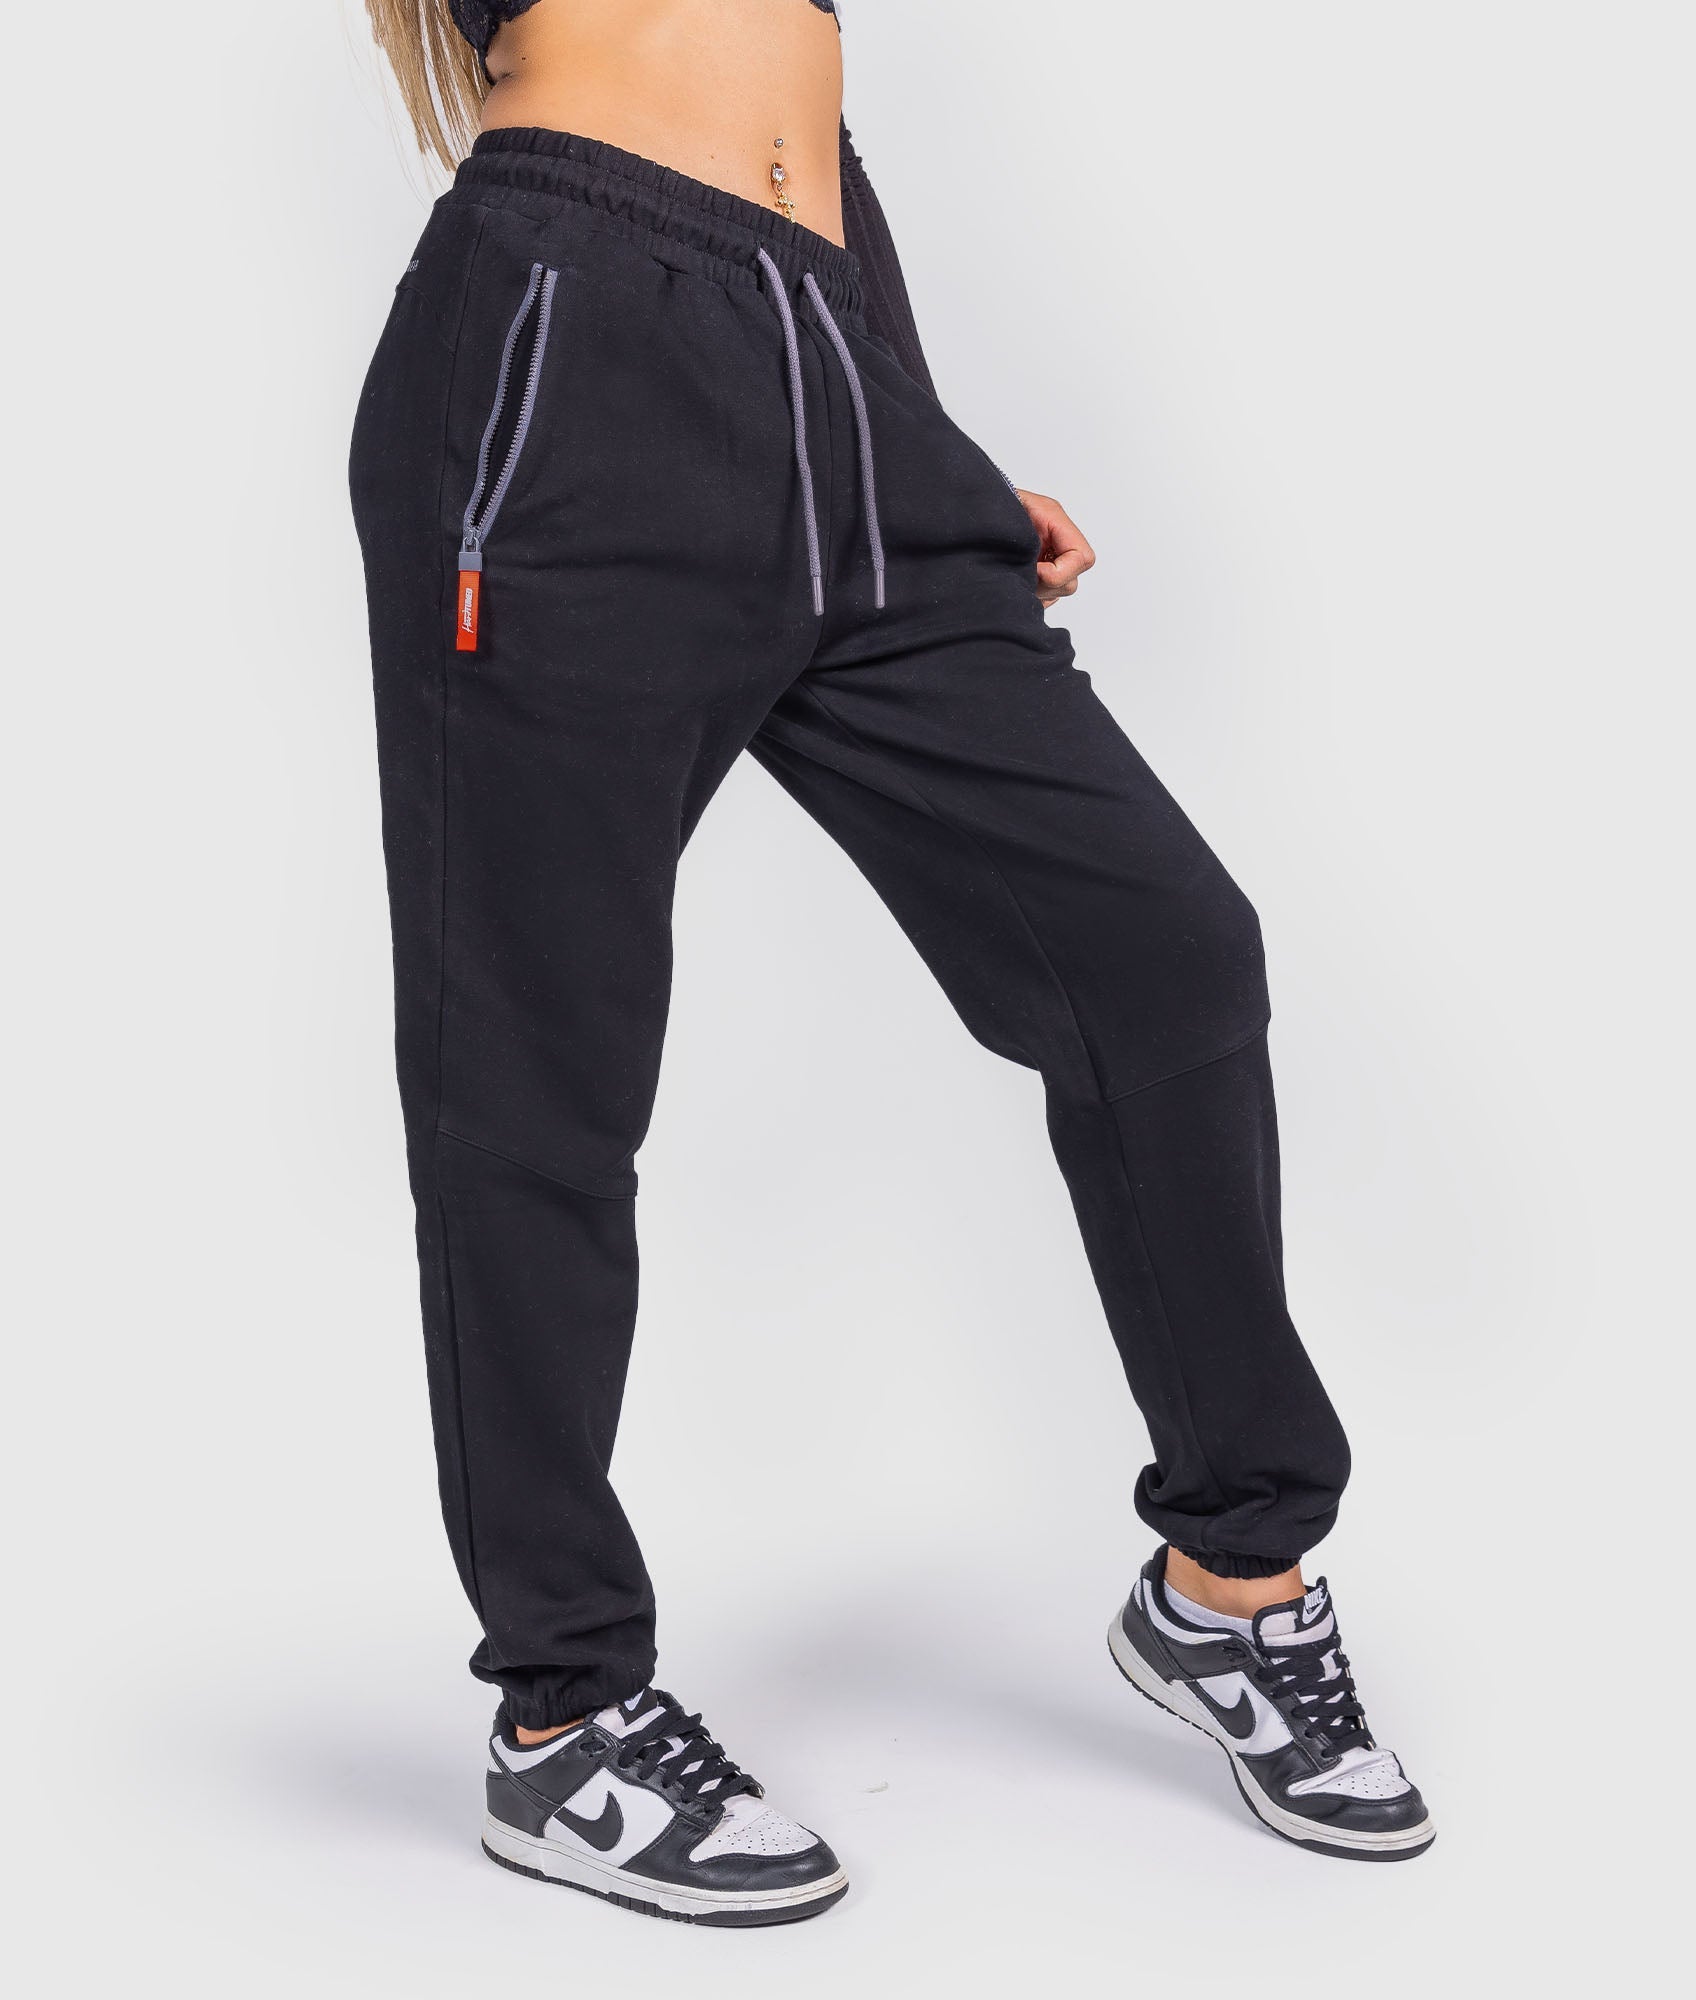 Women's Katakana P1 Fleece Track Pants - Black - Hardtuned